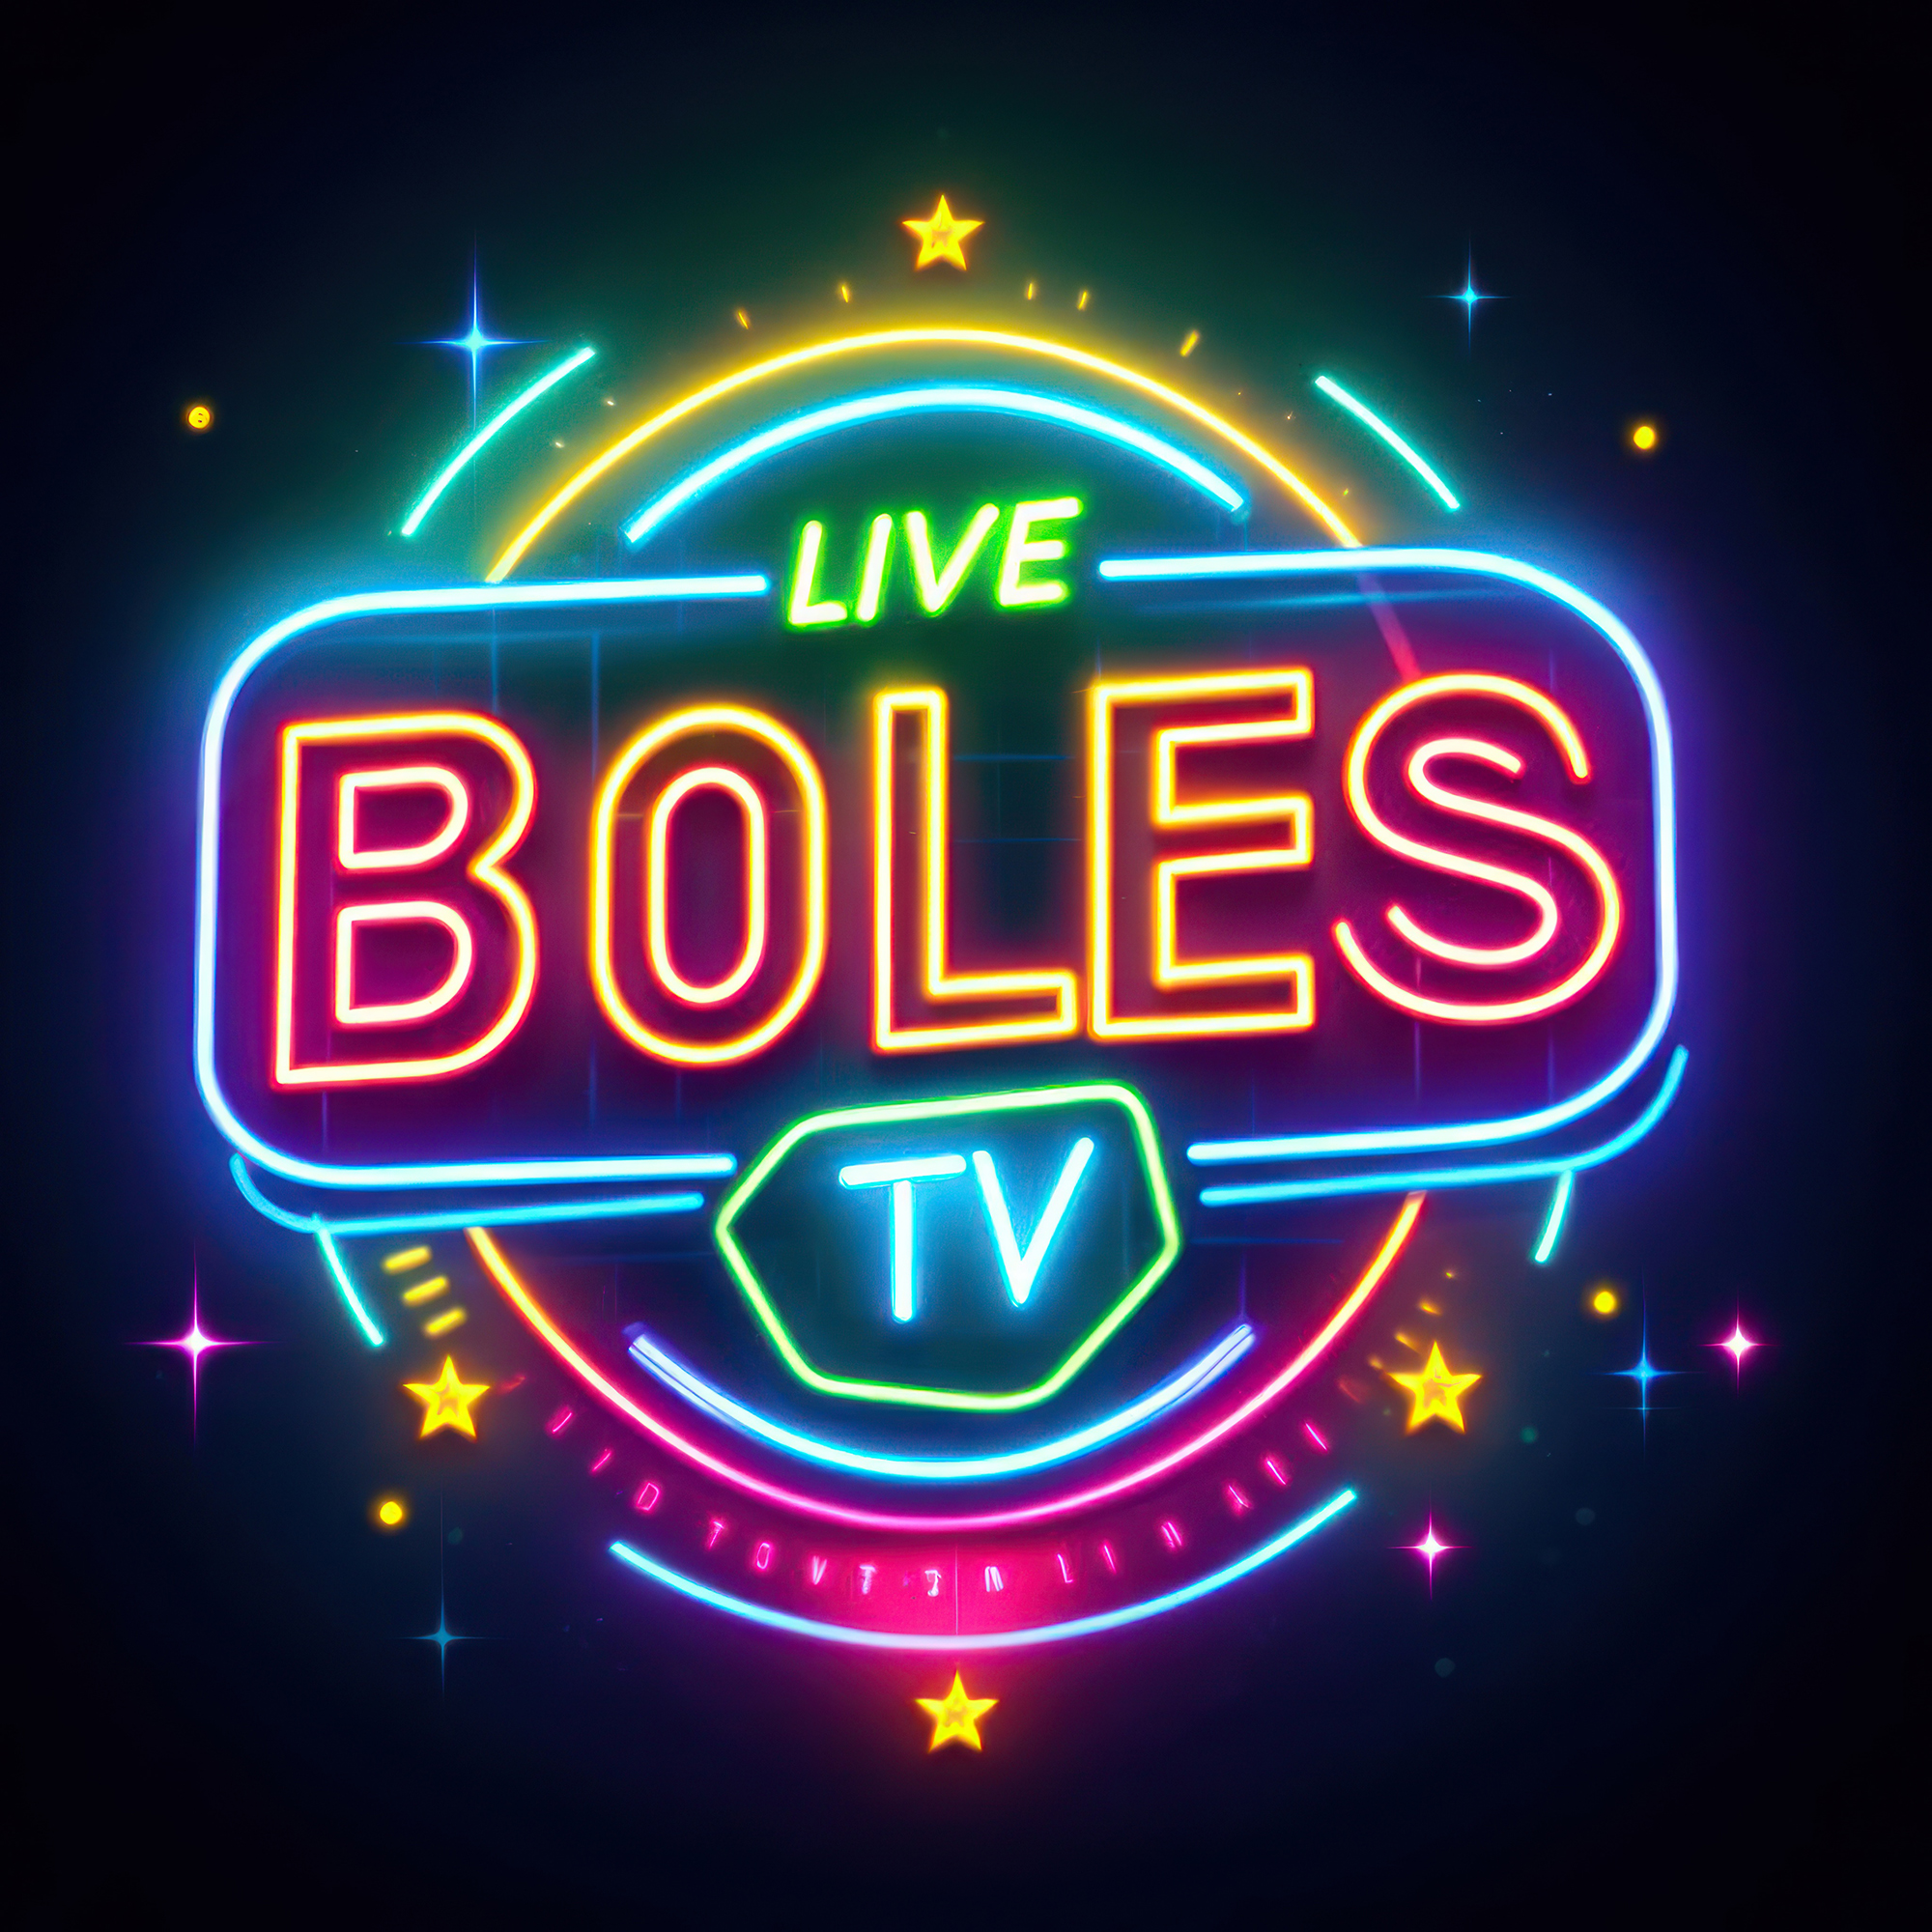 Boles.tv Logo